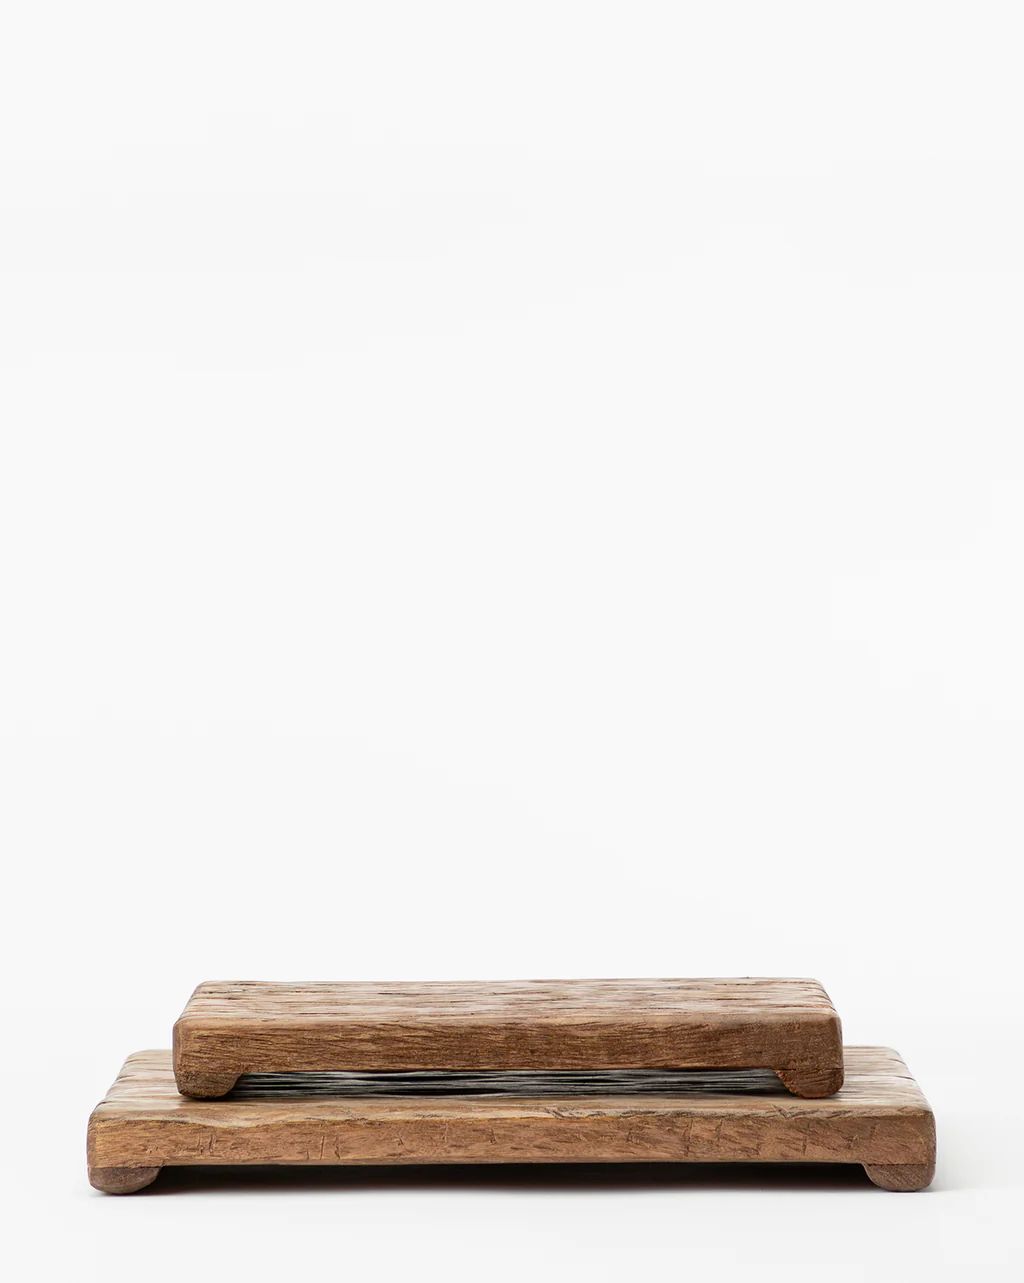 Mango Wood Rectangular Pedestal | McGee & Co. (US)